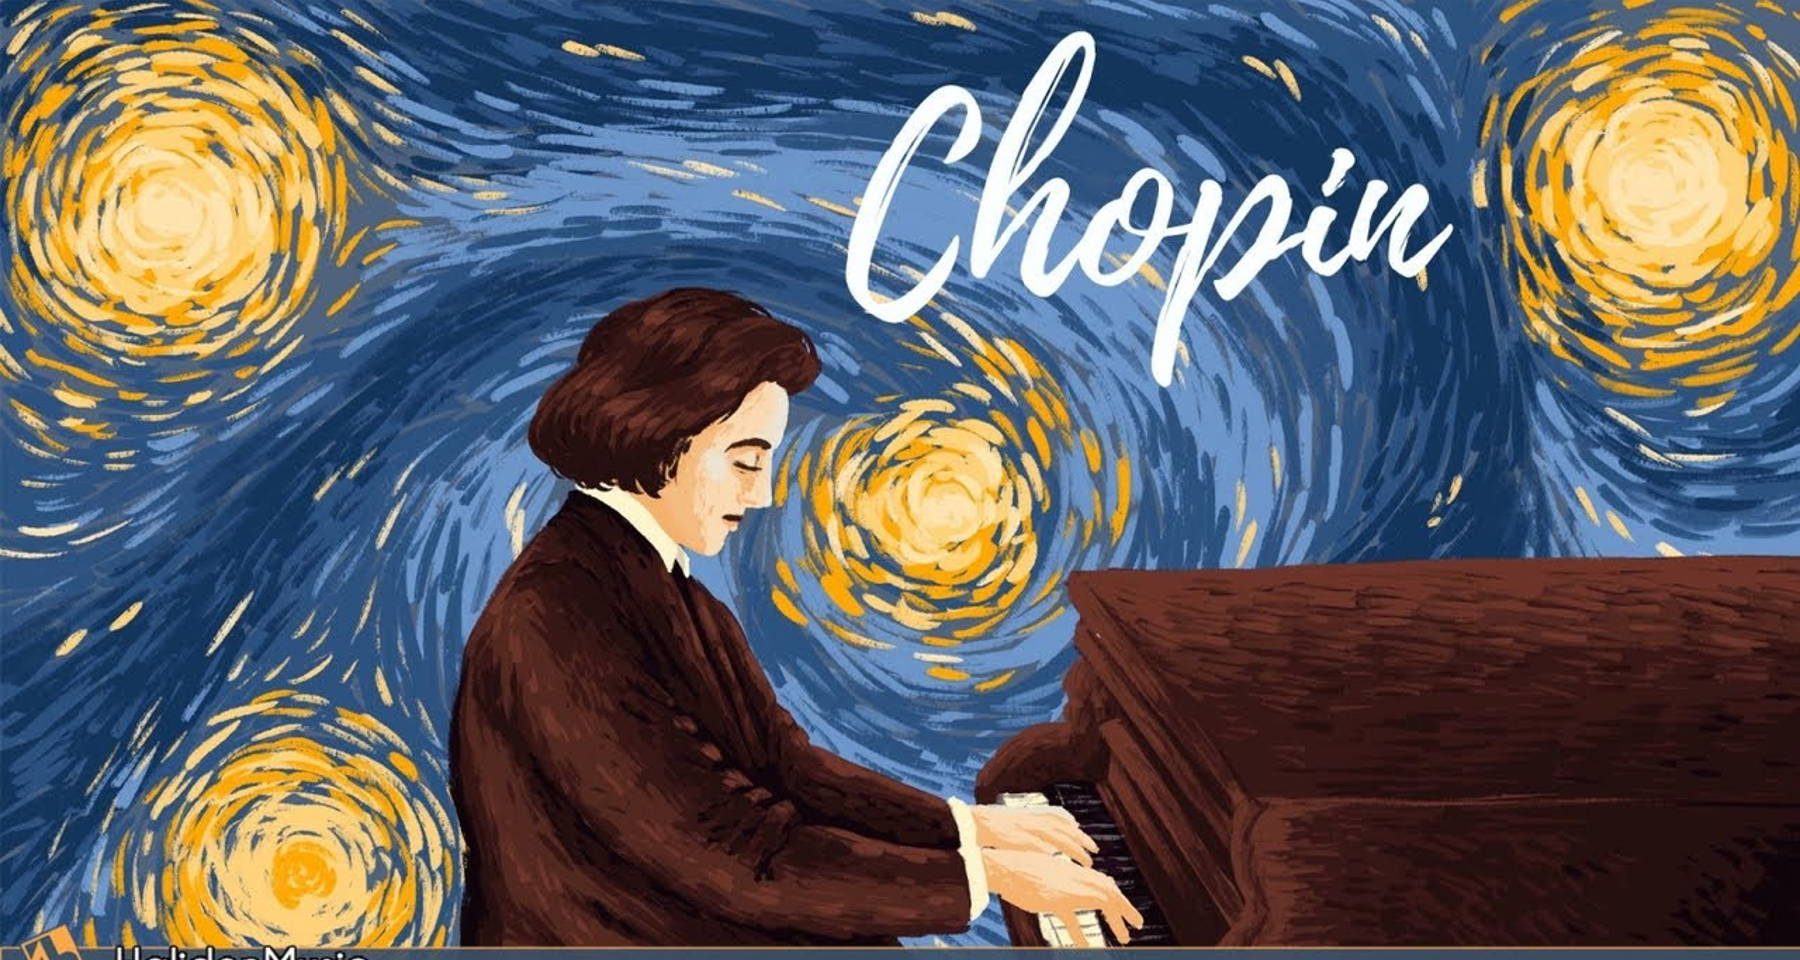 Chopin on Riverside